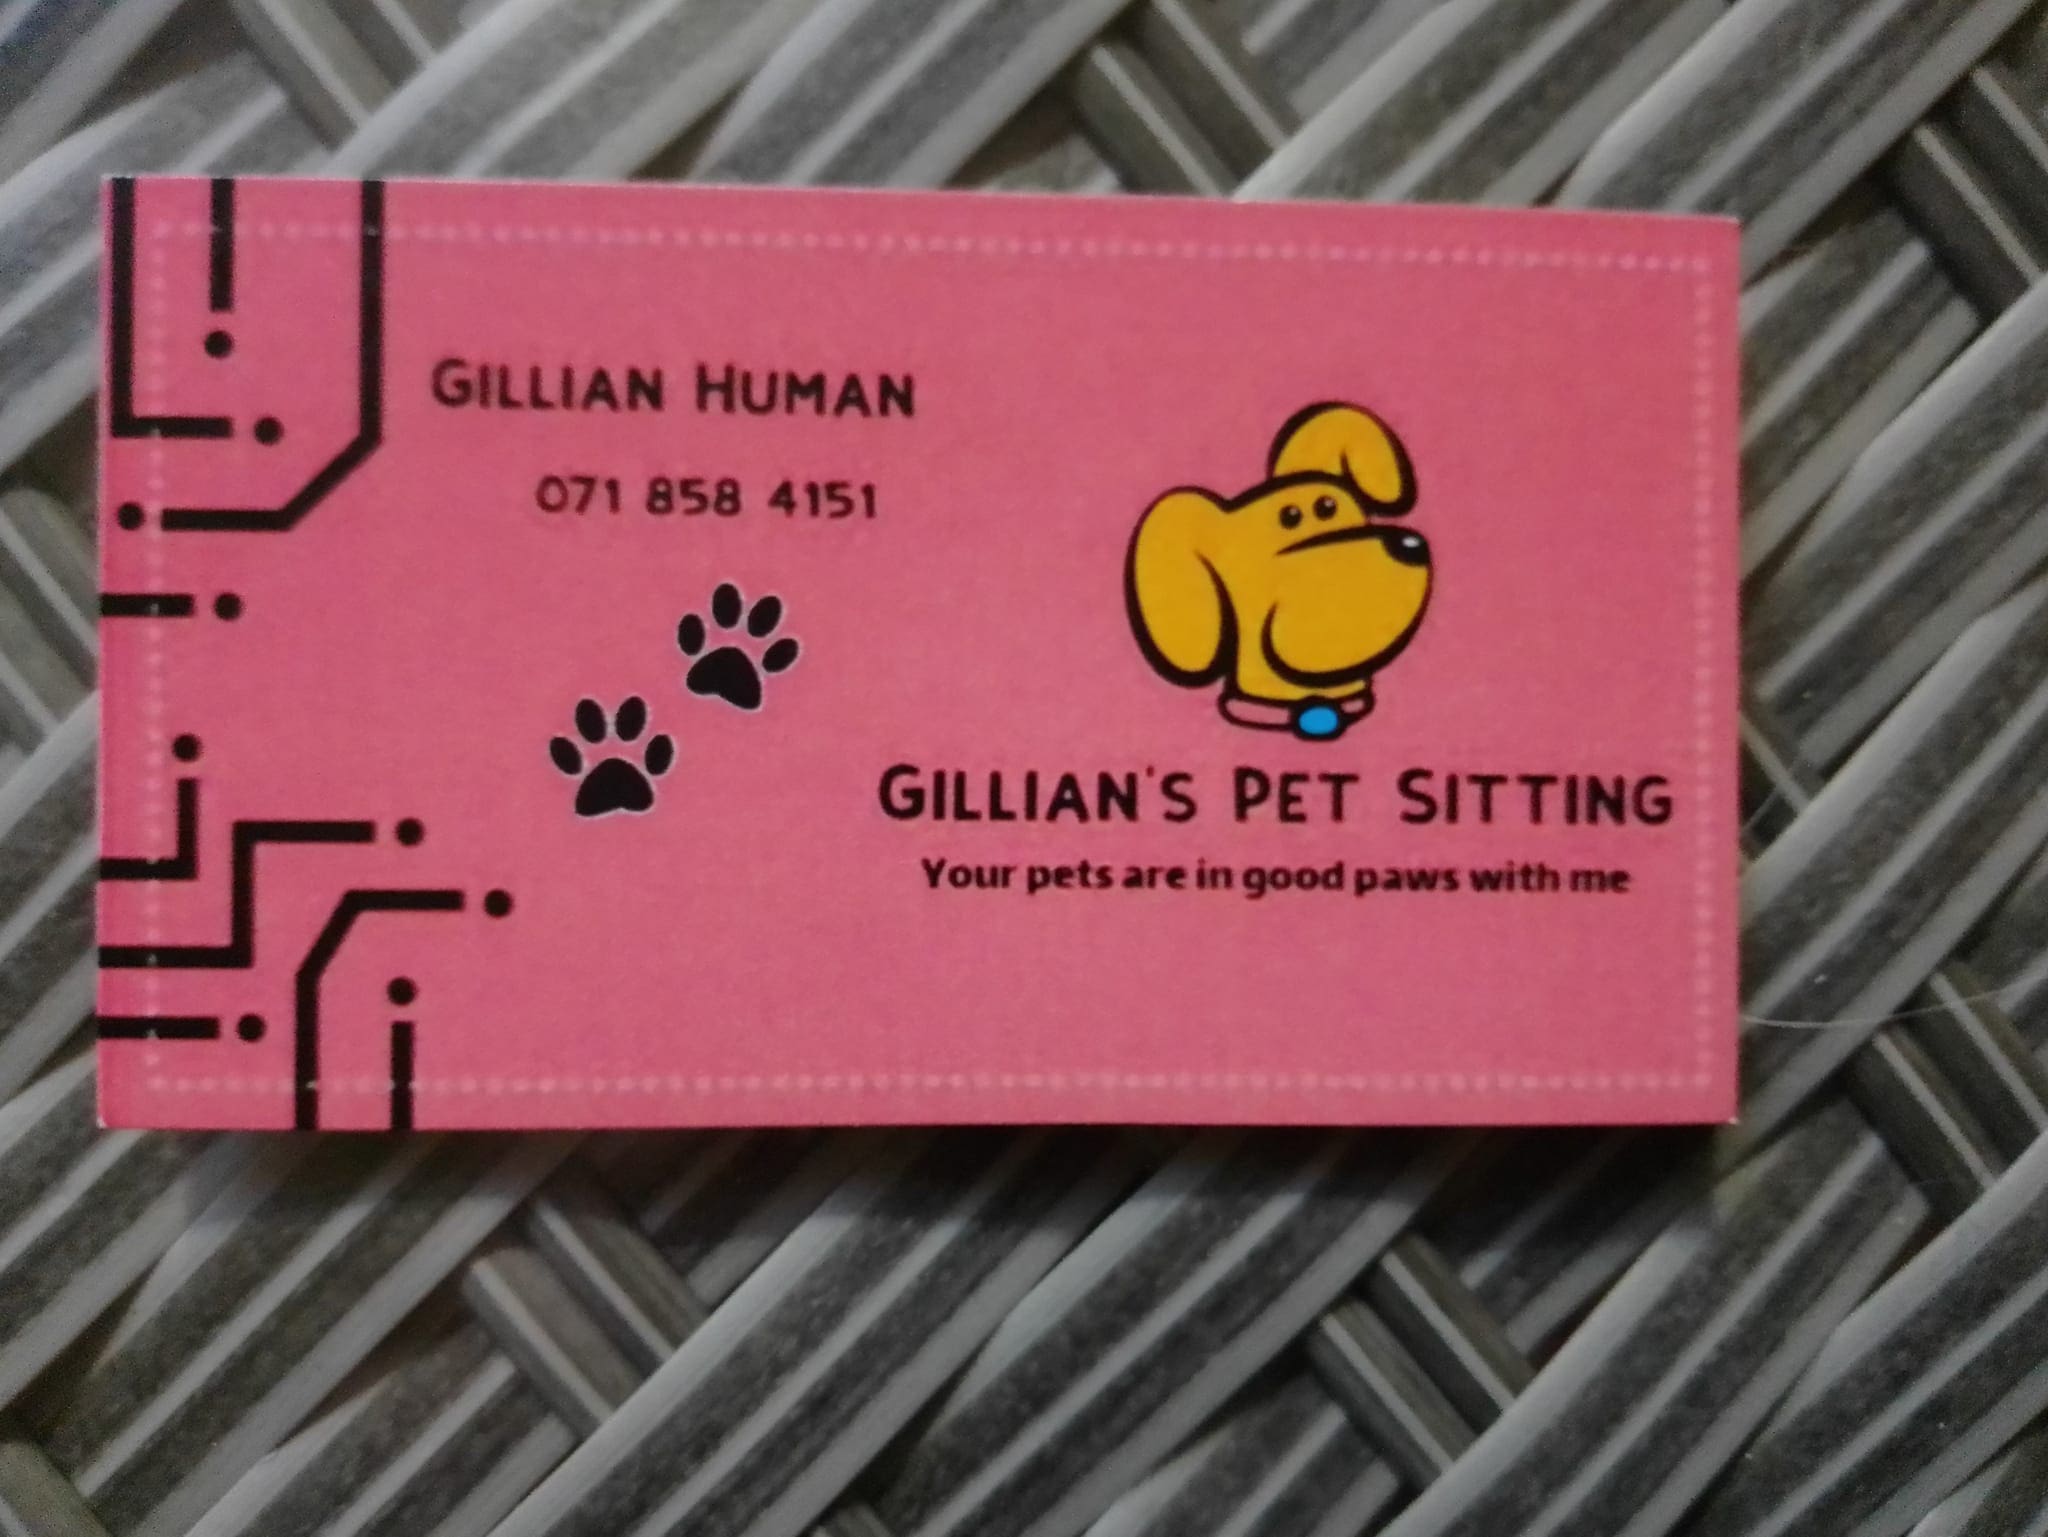 Gillian’s Pet Sitting